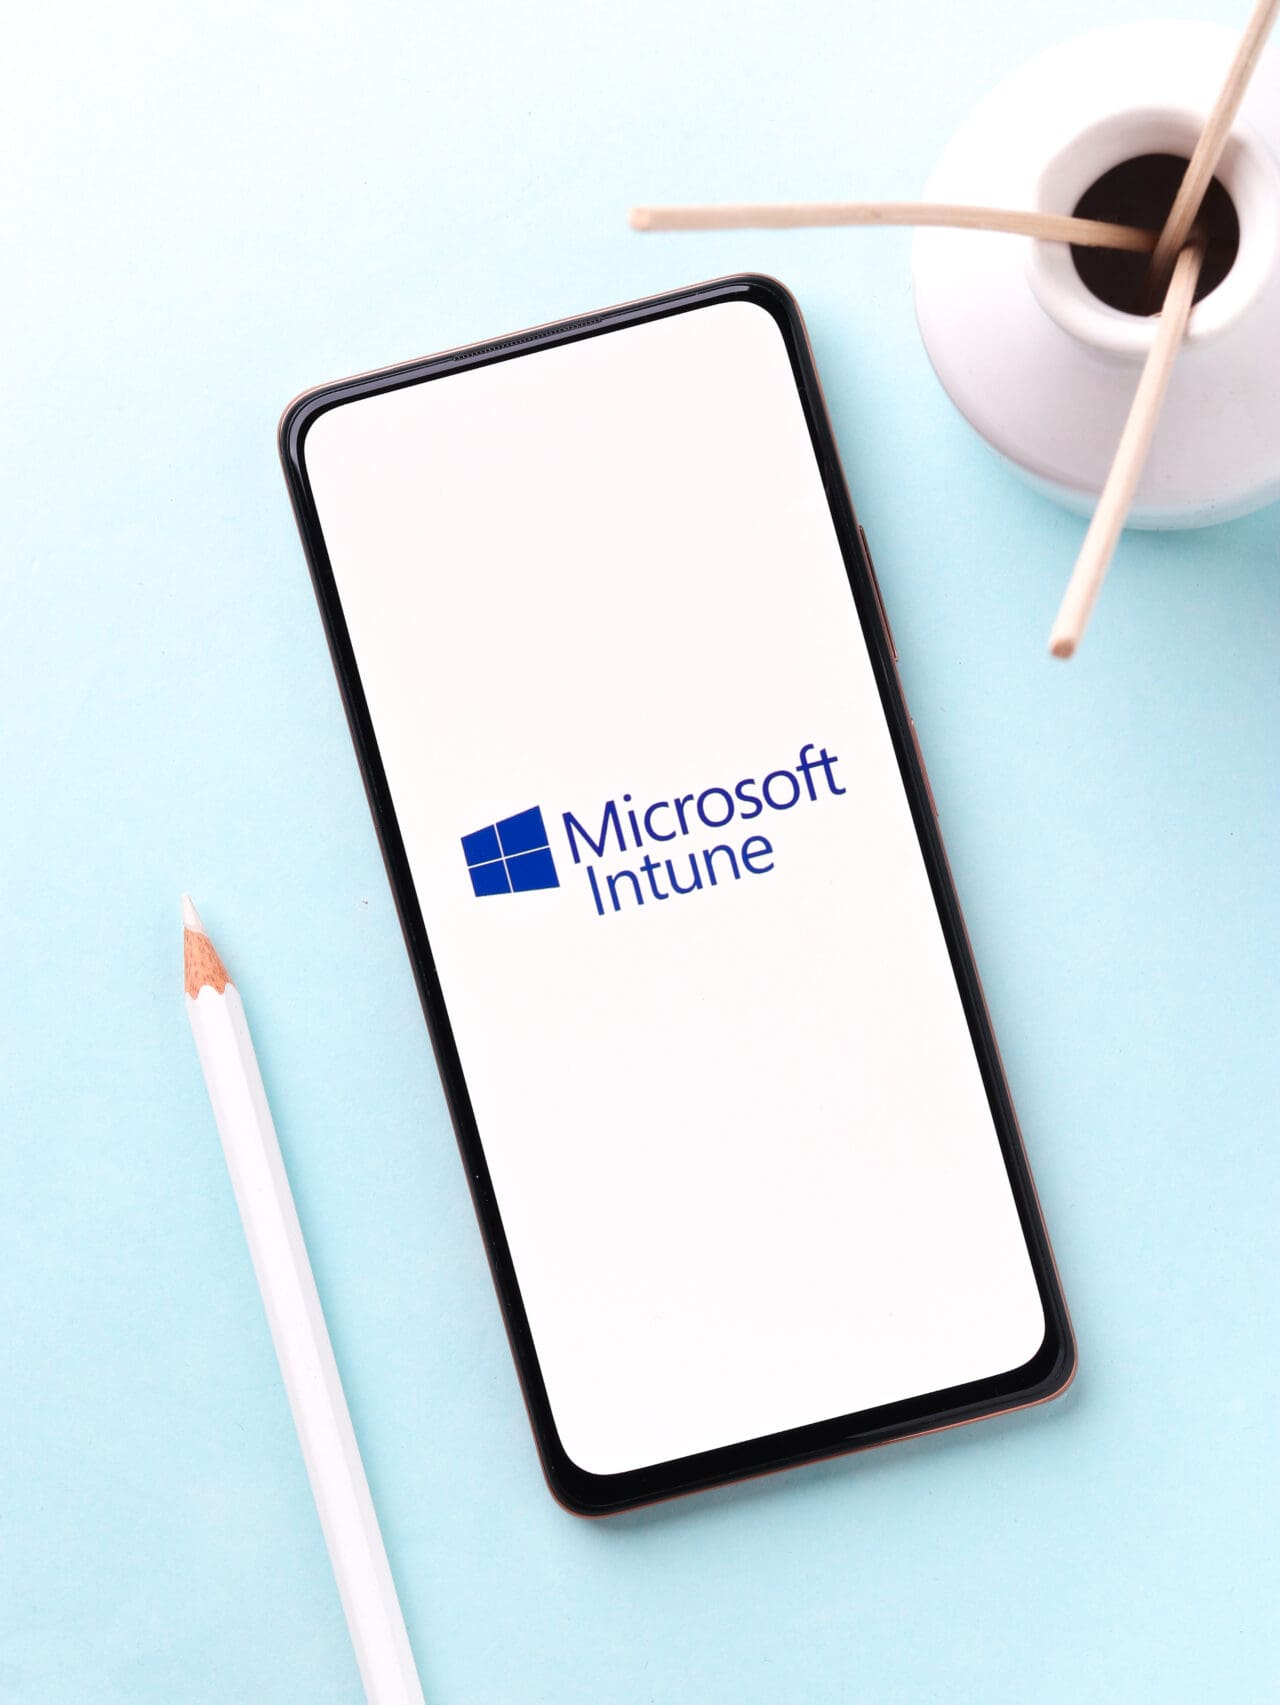 West Bangal, India - November 11, 2021 : Microsoft Intune logo